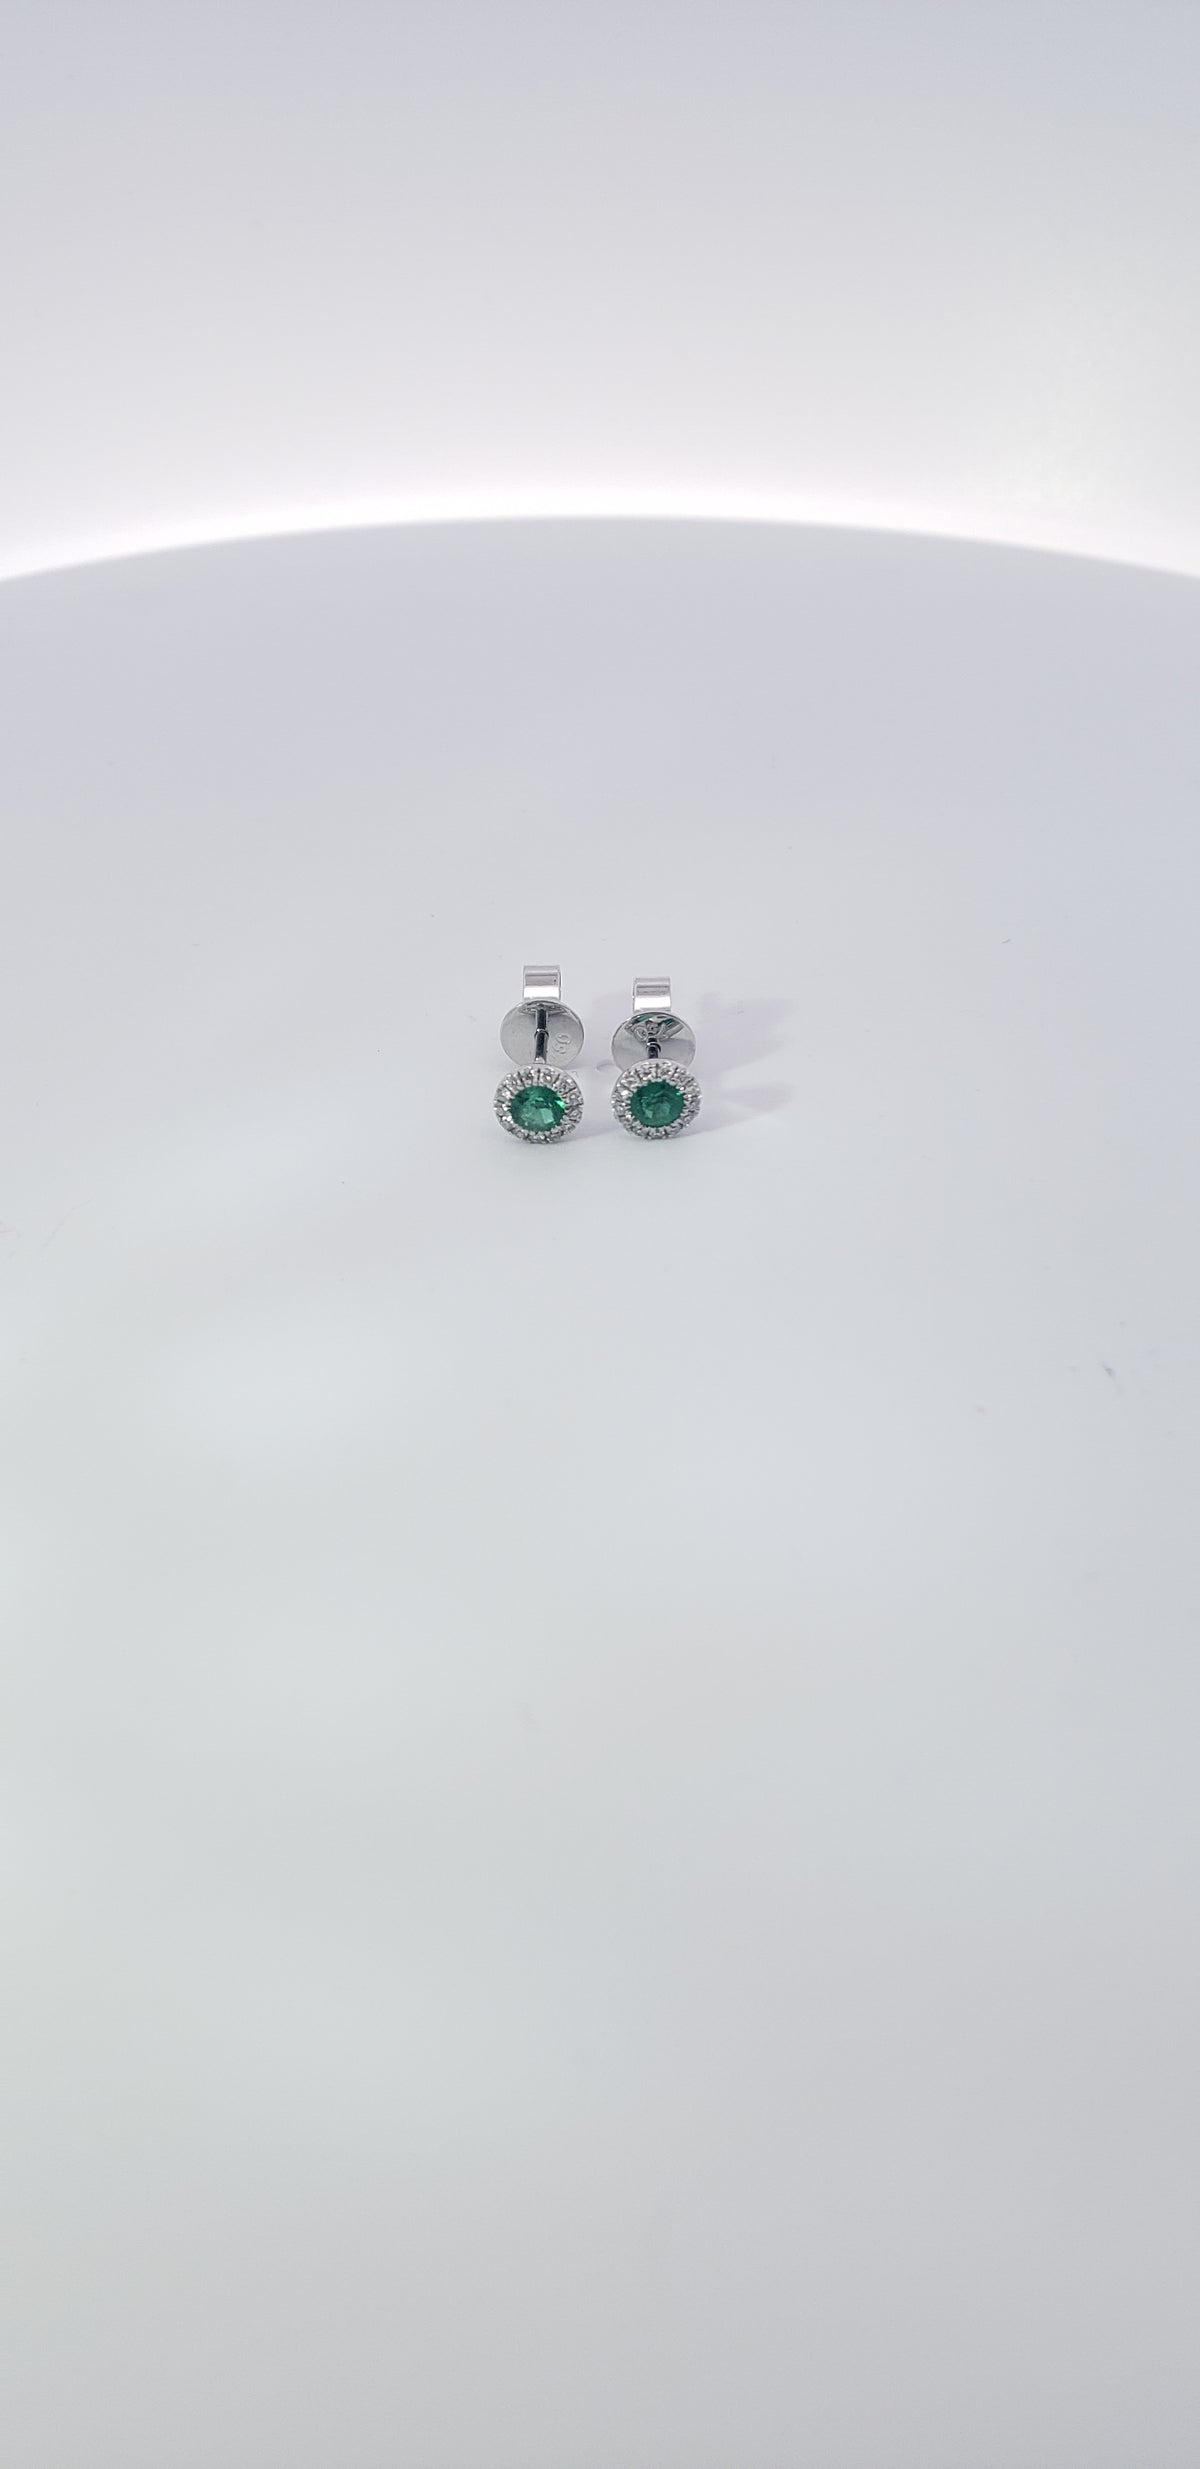 14K White Gold  Emerald and Diamond Halo Stud Earrings